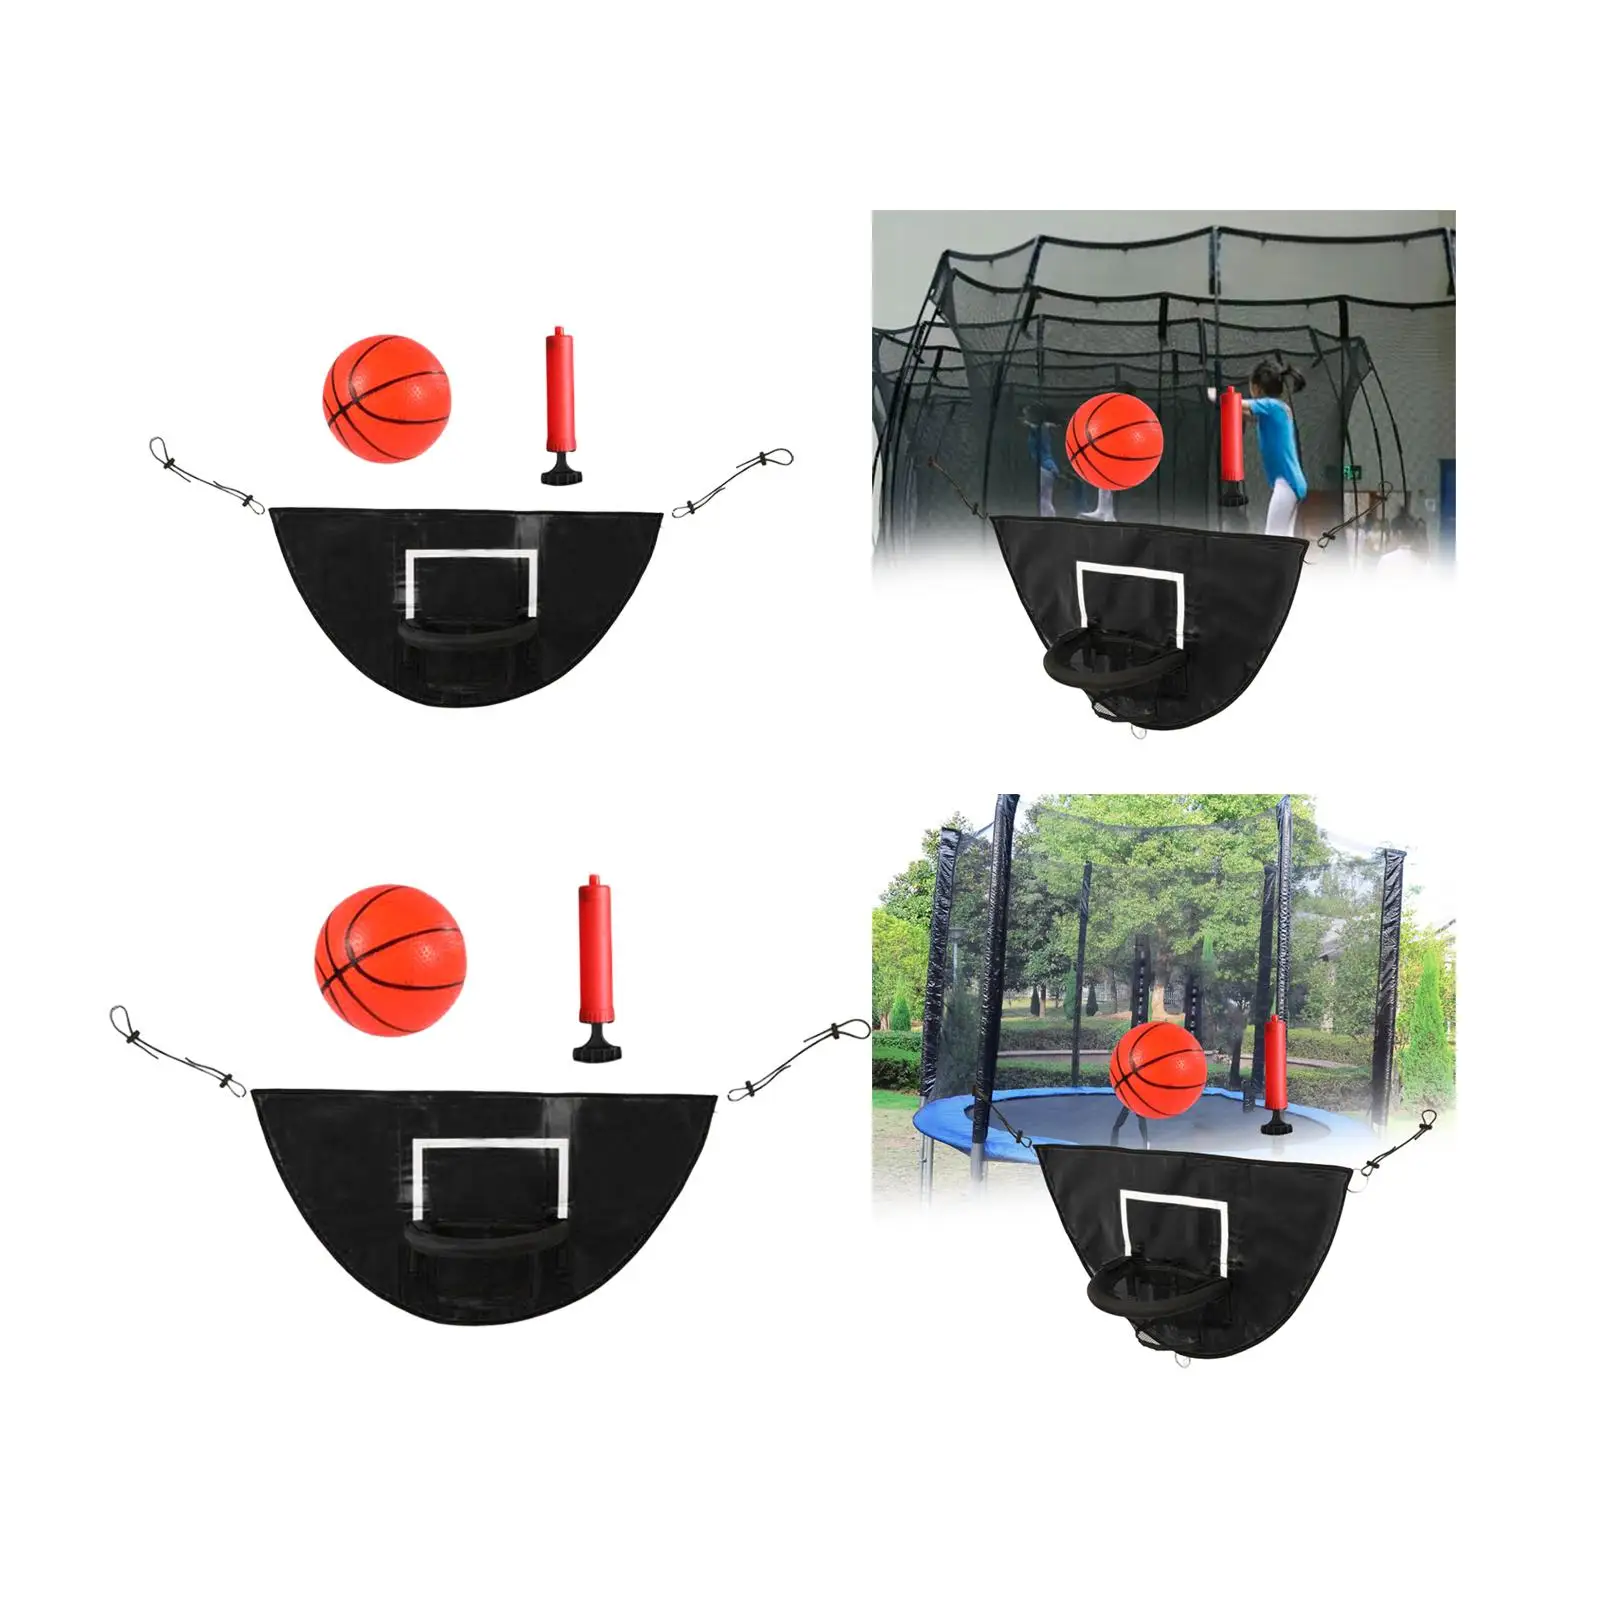 Kids Basketball Hoop Lightweight Universal Board with Mini Basketball and Pump